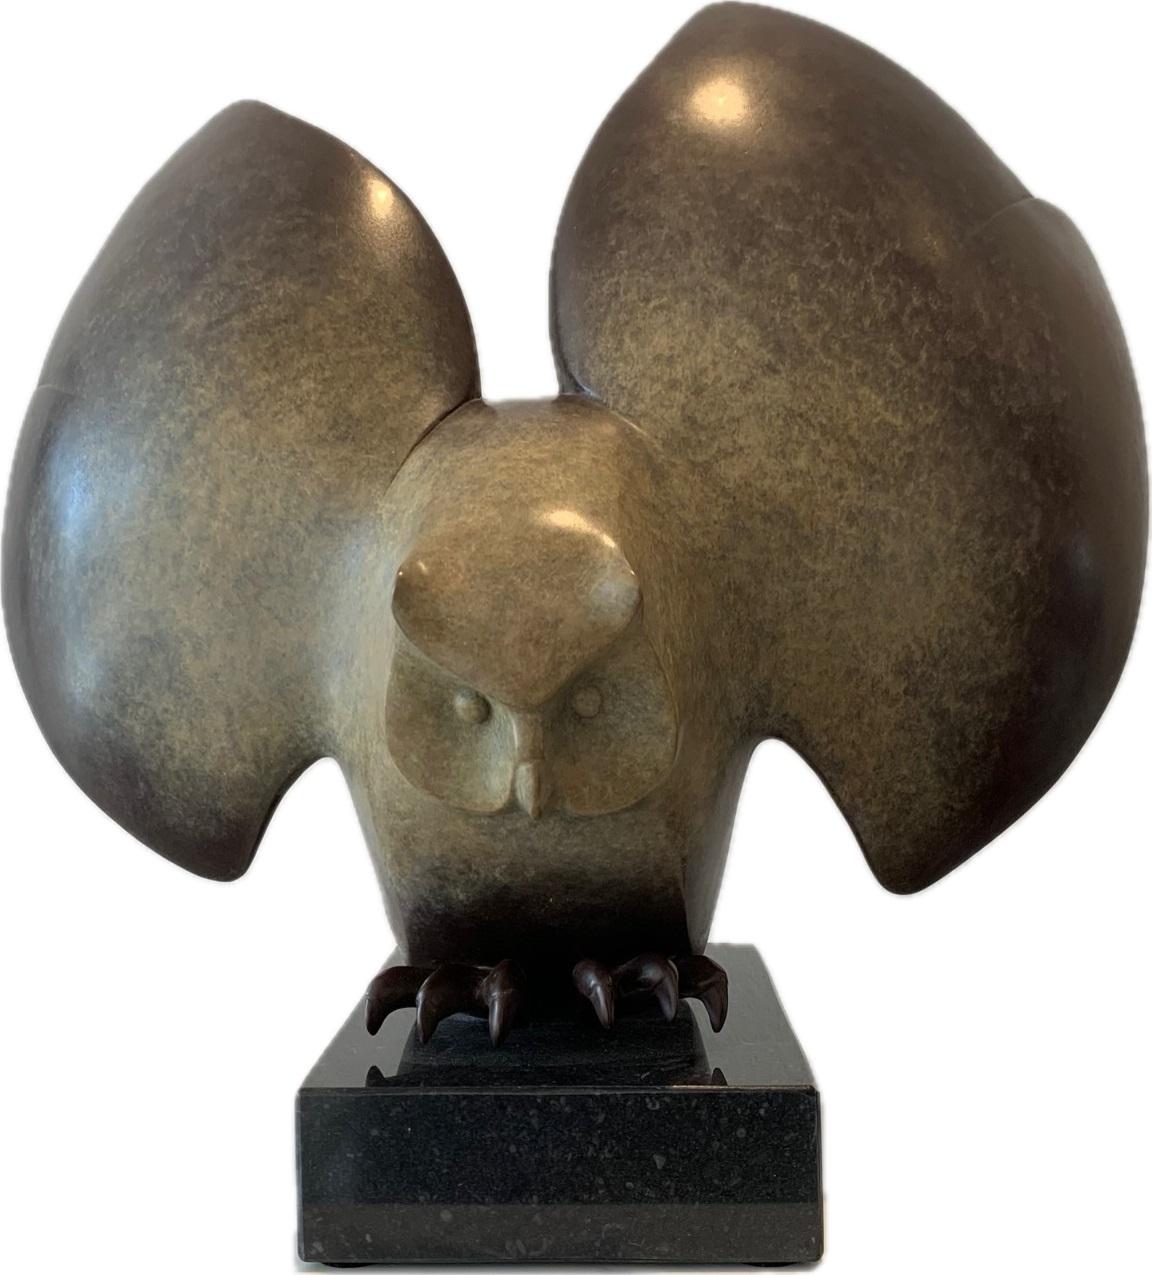 Evert den Hartog Figurative Sculpture – Landende Uil Nr. 3 Landende Eule Bronzeskulptur Limitierte Auflage Sonderpatina